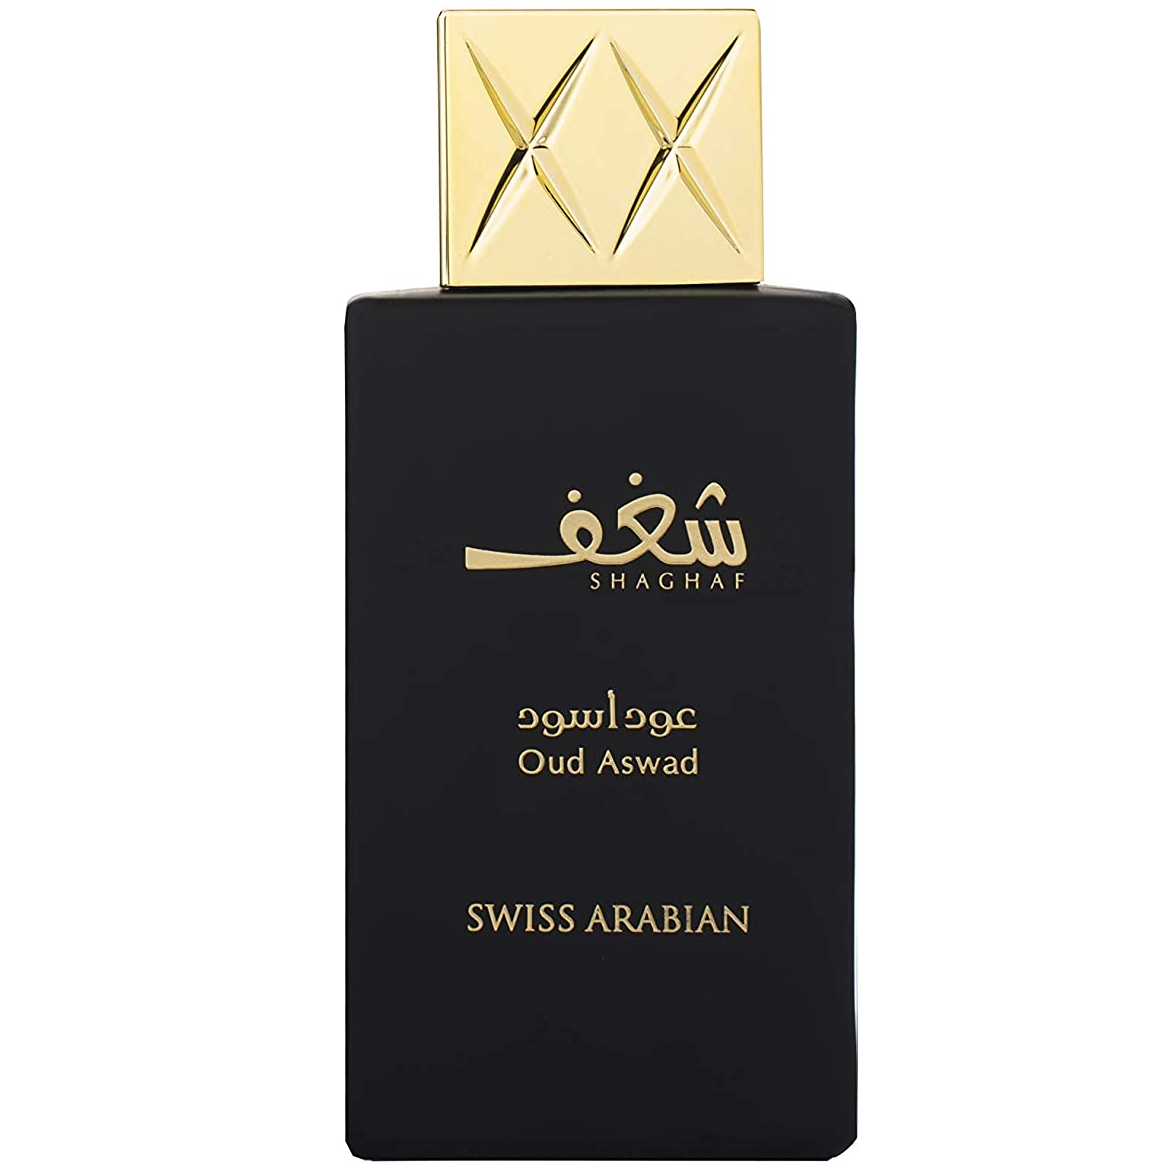 Swiss Arabian - Shaghaf Oud Aswad (75мл)